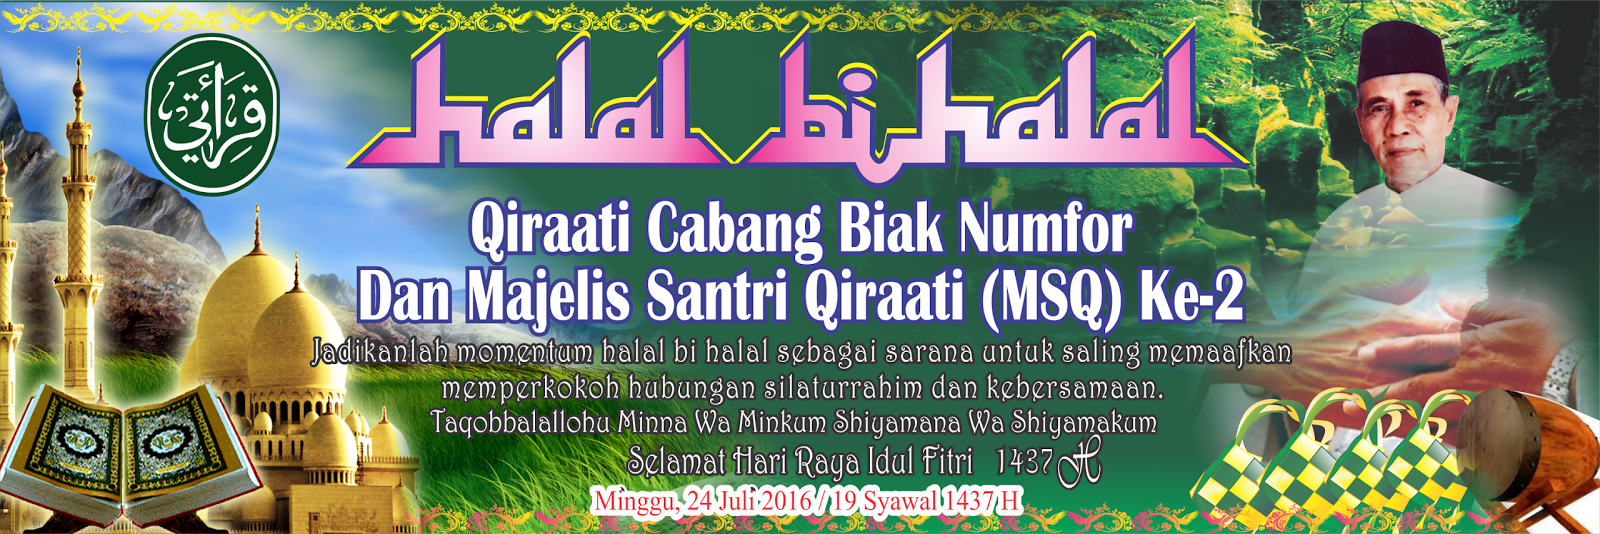 Contoh Desain Spanduk Halal Bihalal Idul Fitri